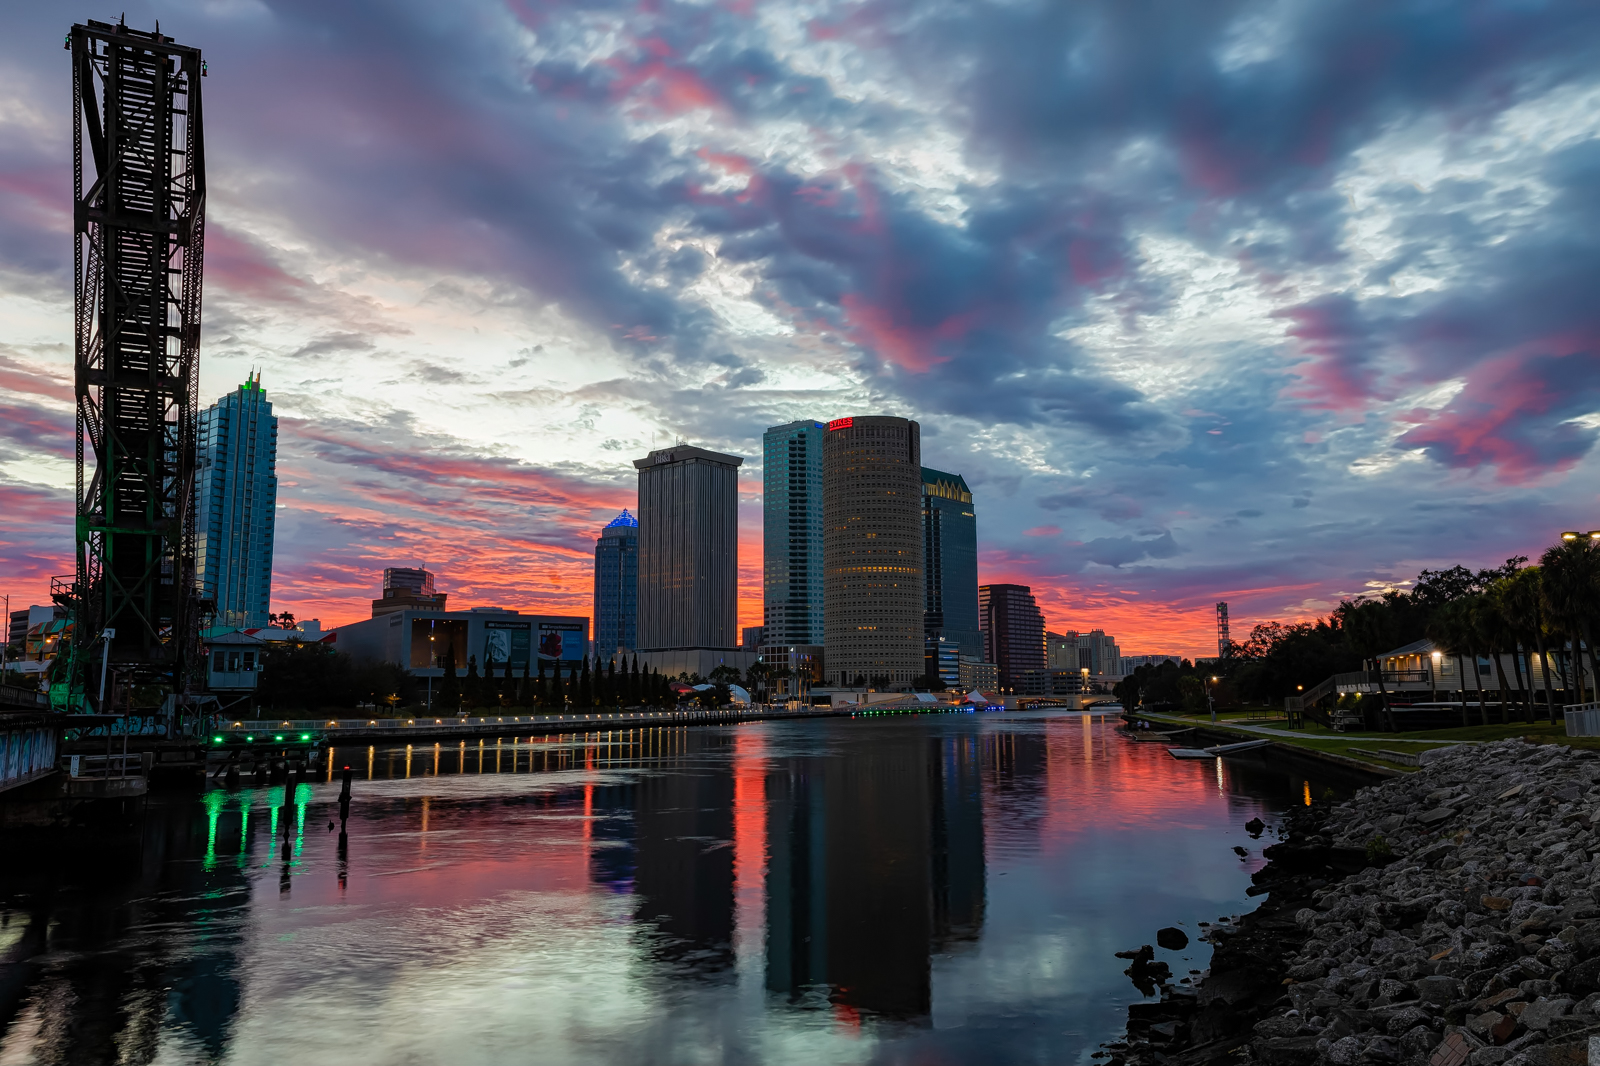 Five Minutes of Beautiful Colors over Tampa, Tampa, Florida